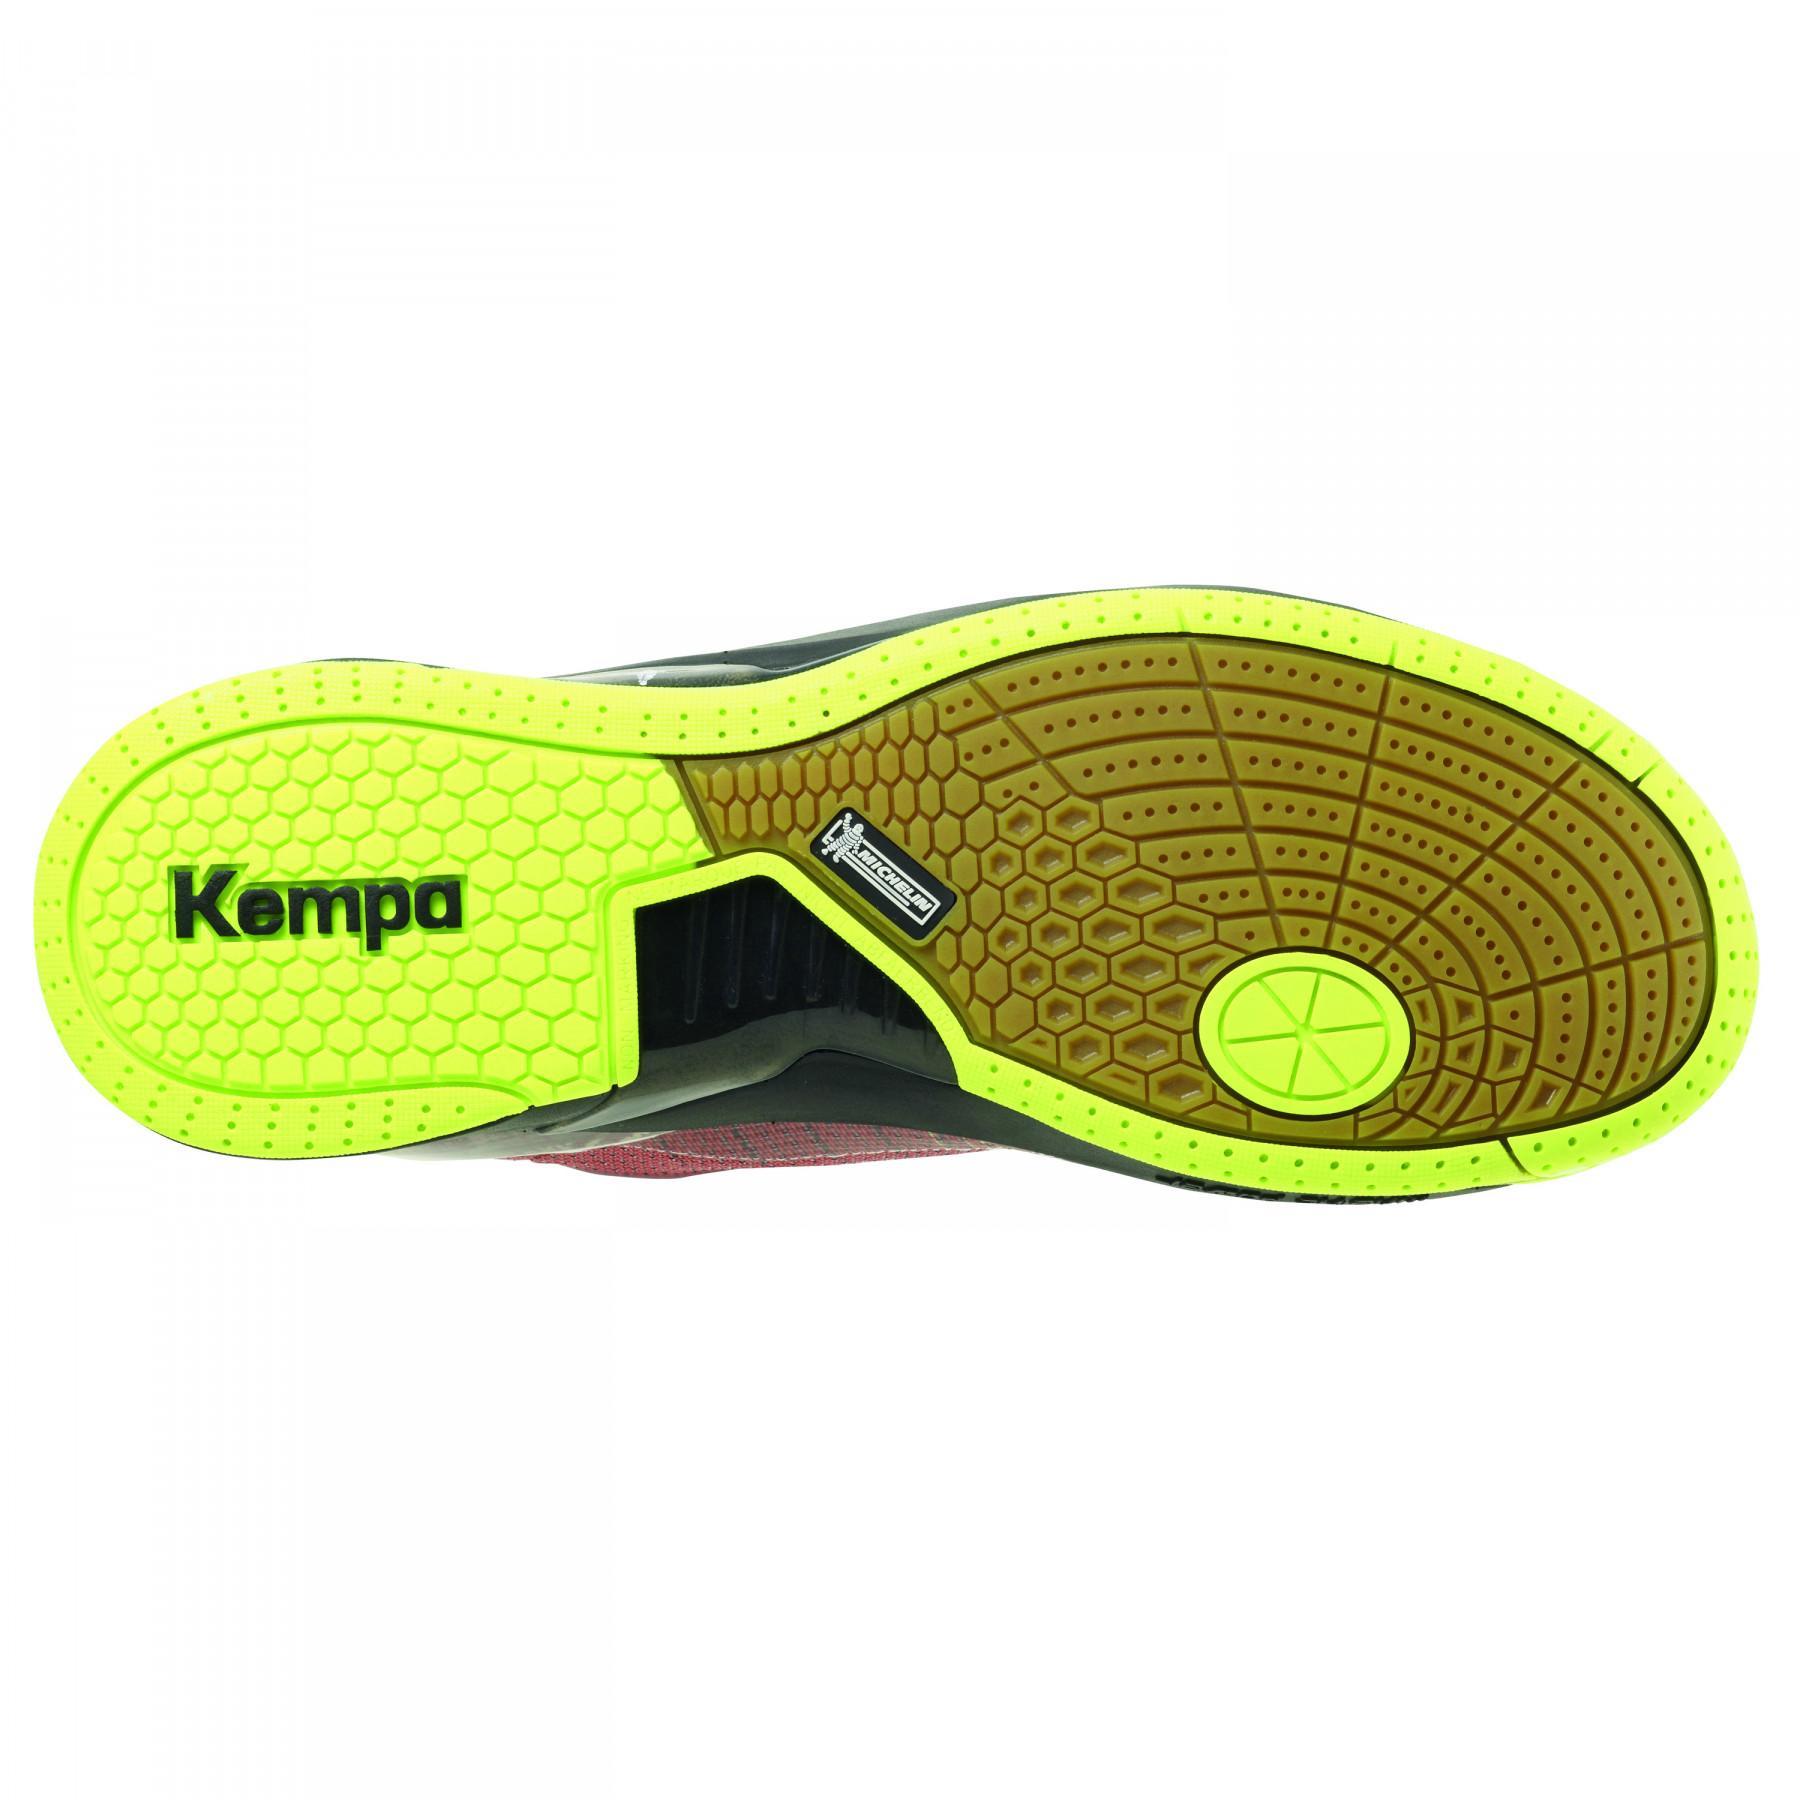 Zapatos Kempa Attack Two Contender